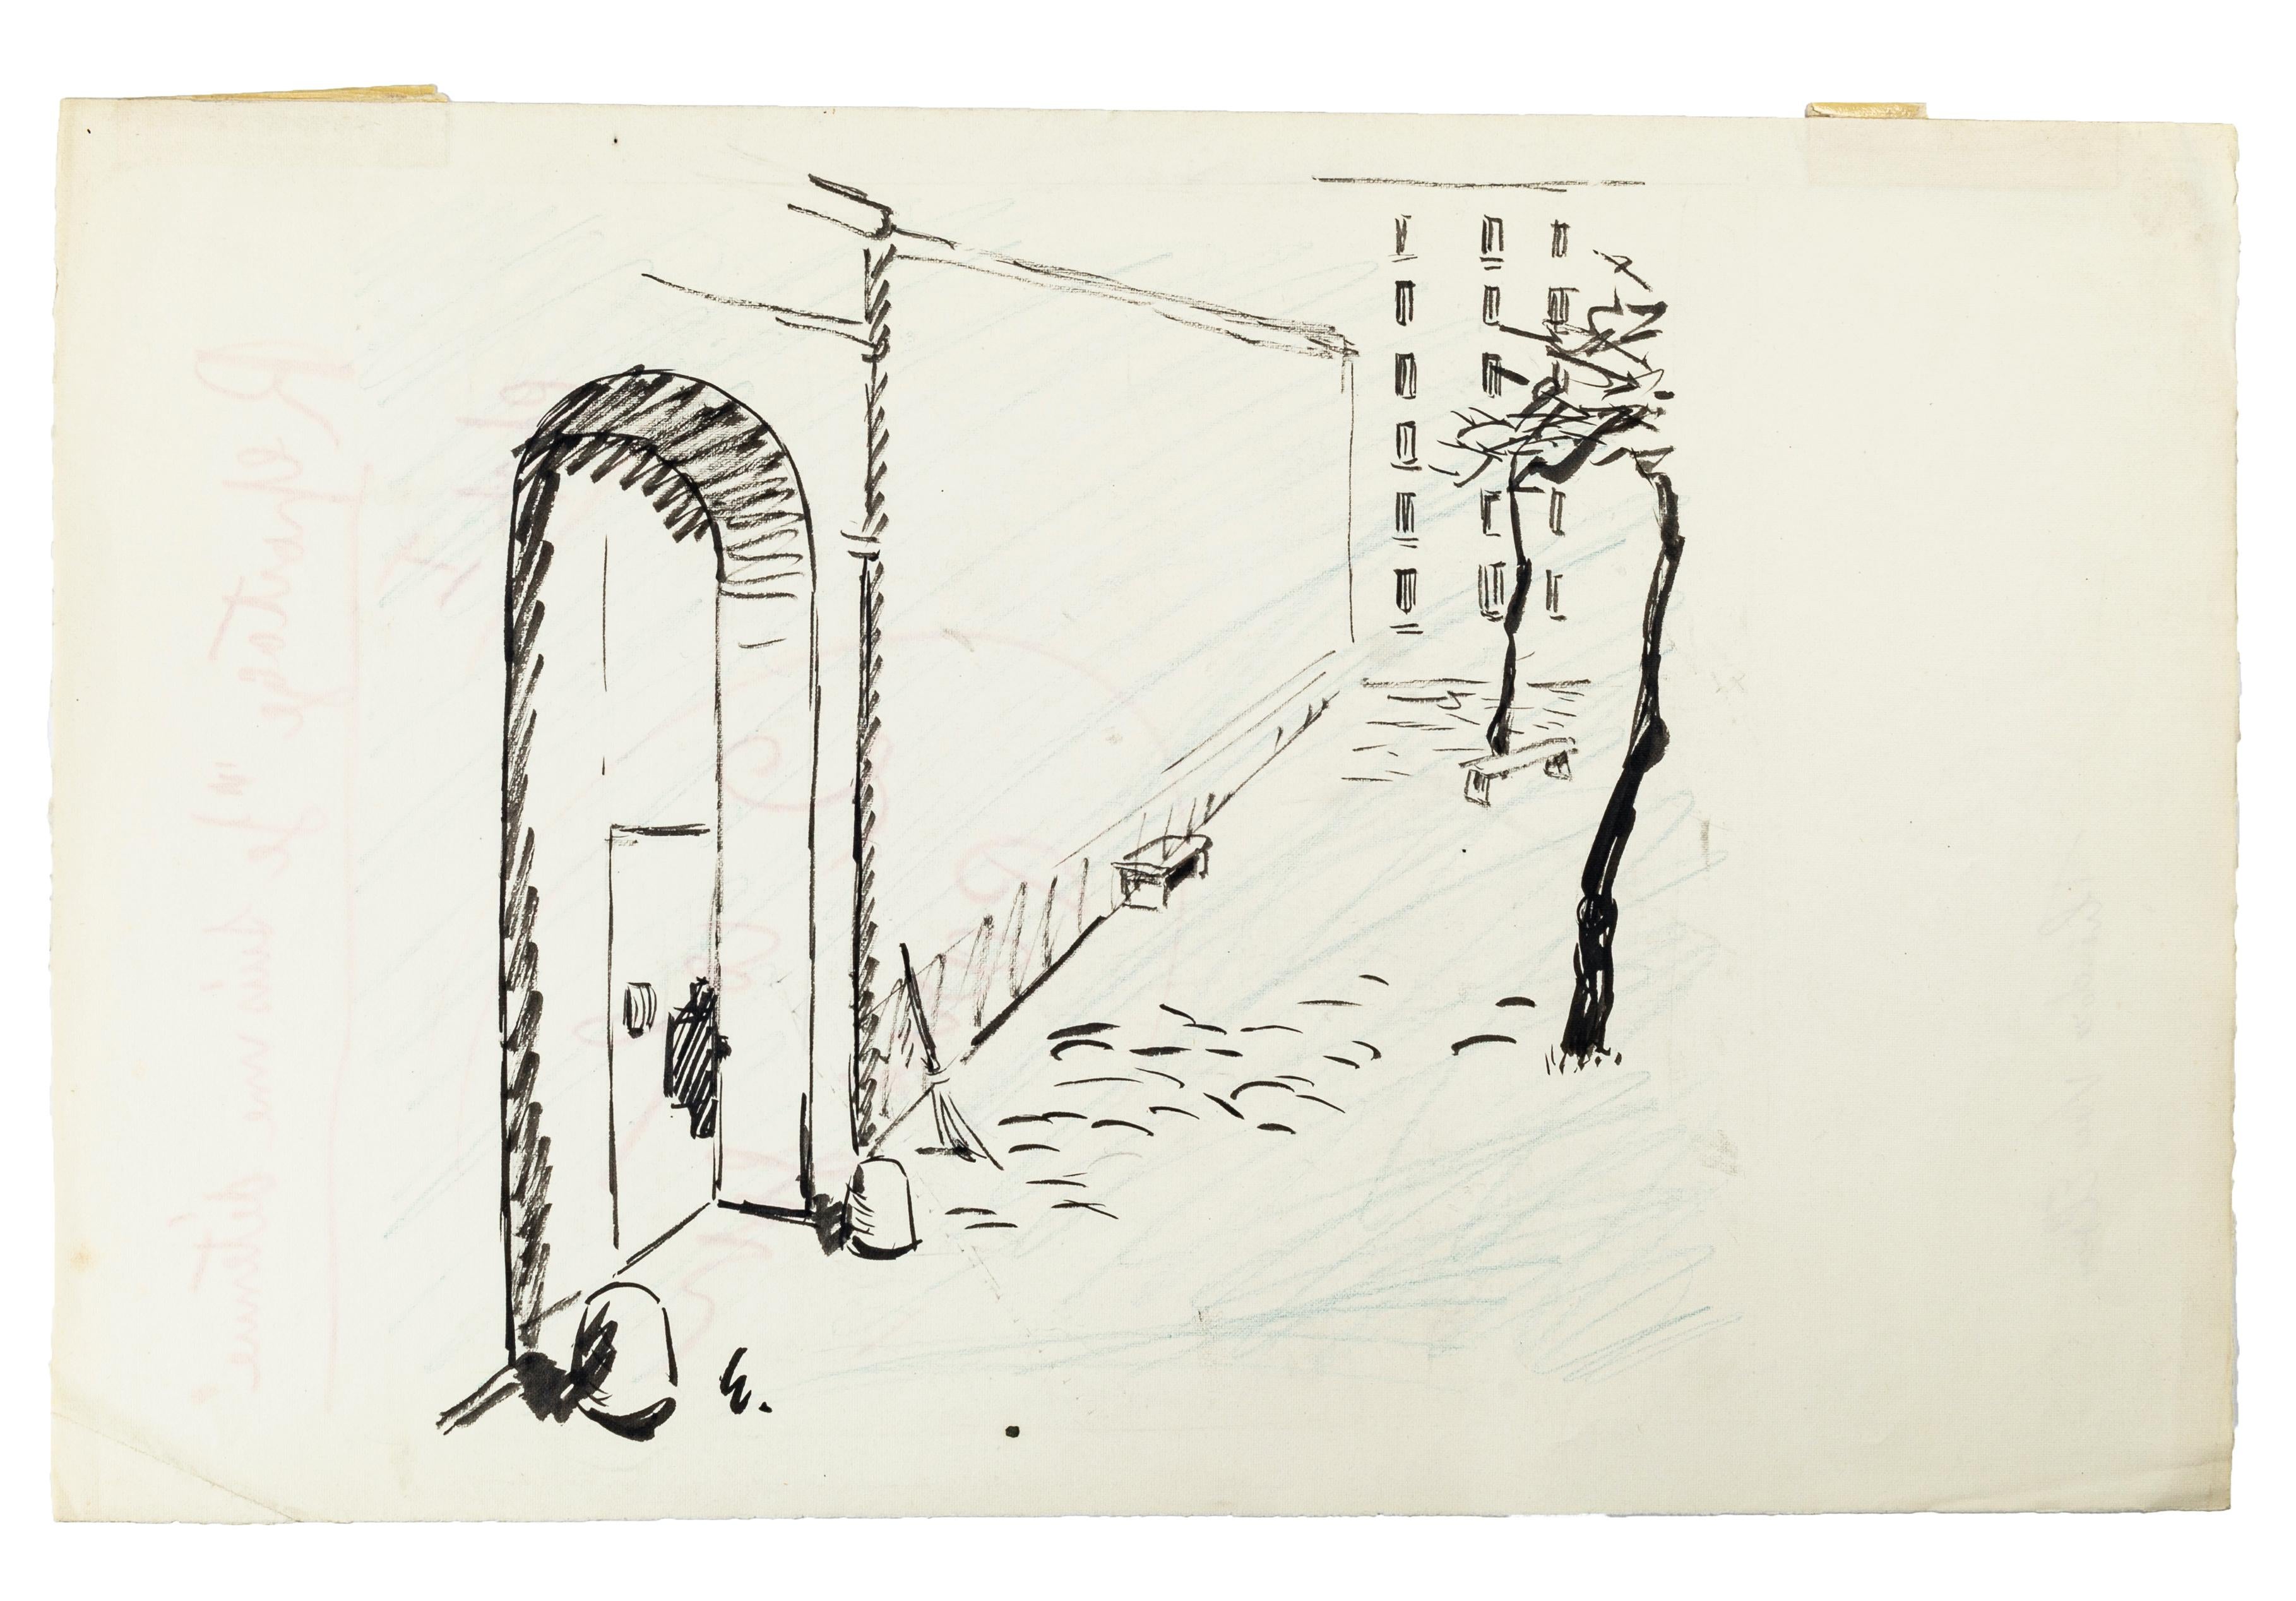 Theodore van Elsen Figurative Art - Je suis une détenue - Chap. I - China Ink Drawing by T. van Elsen - 1950s